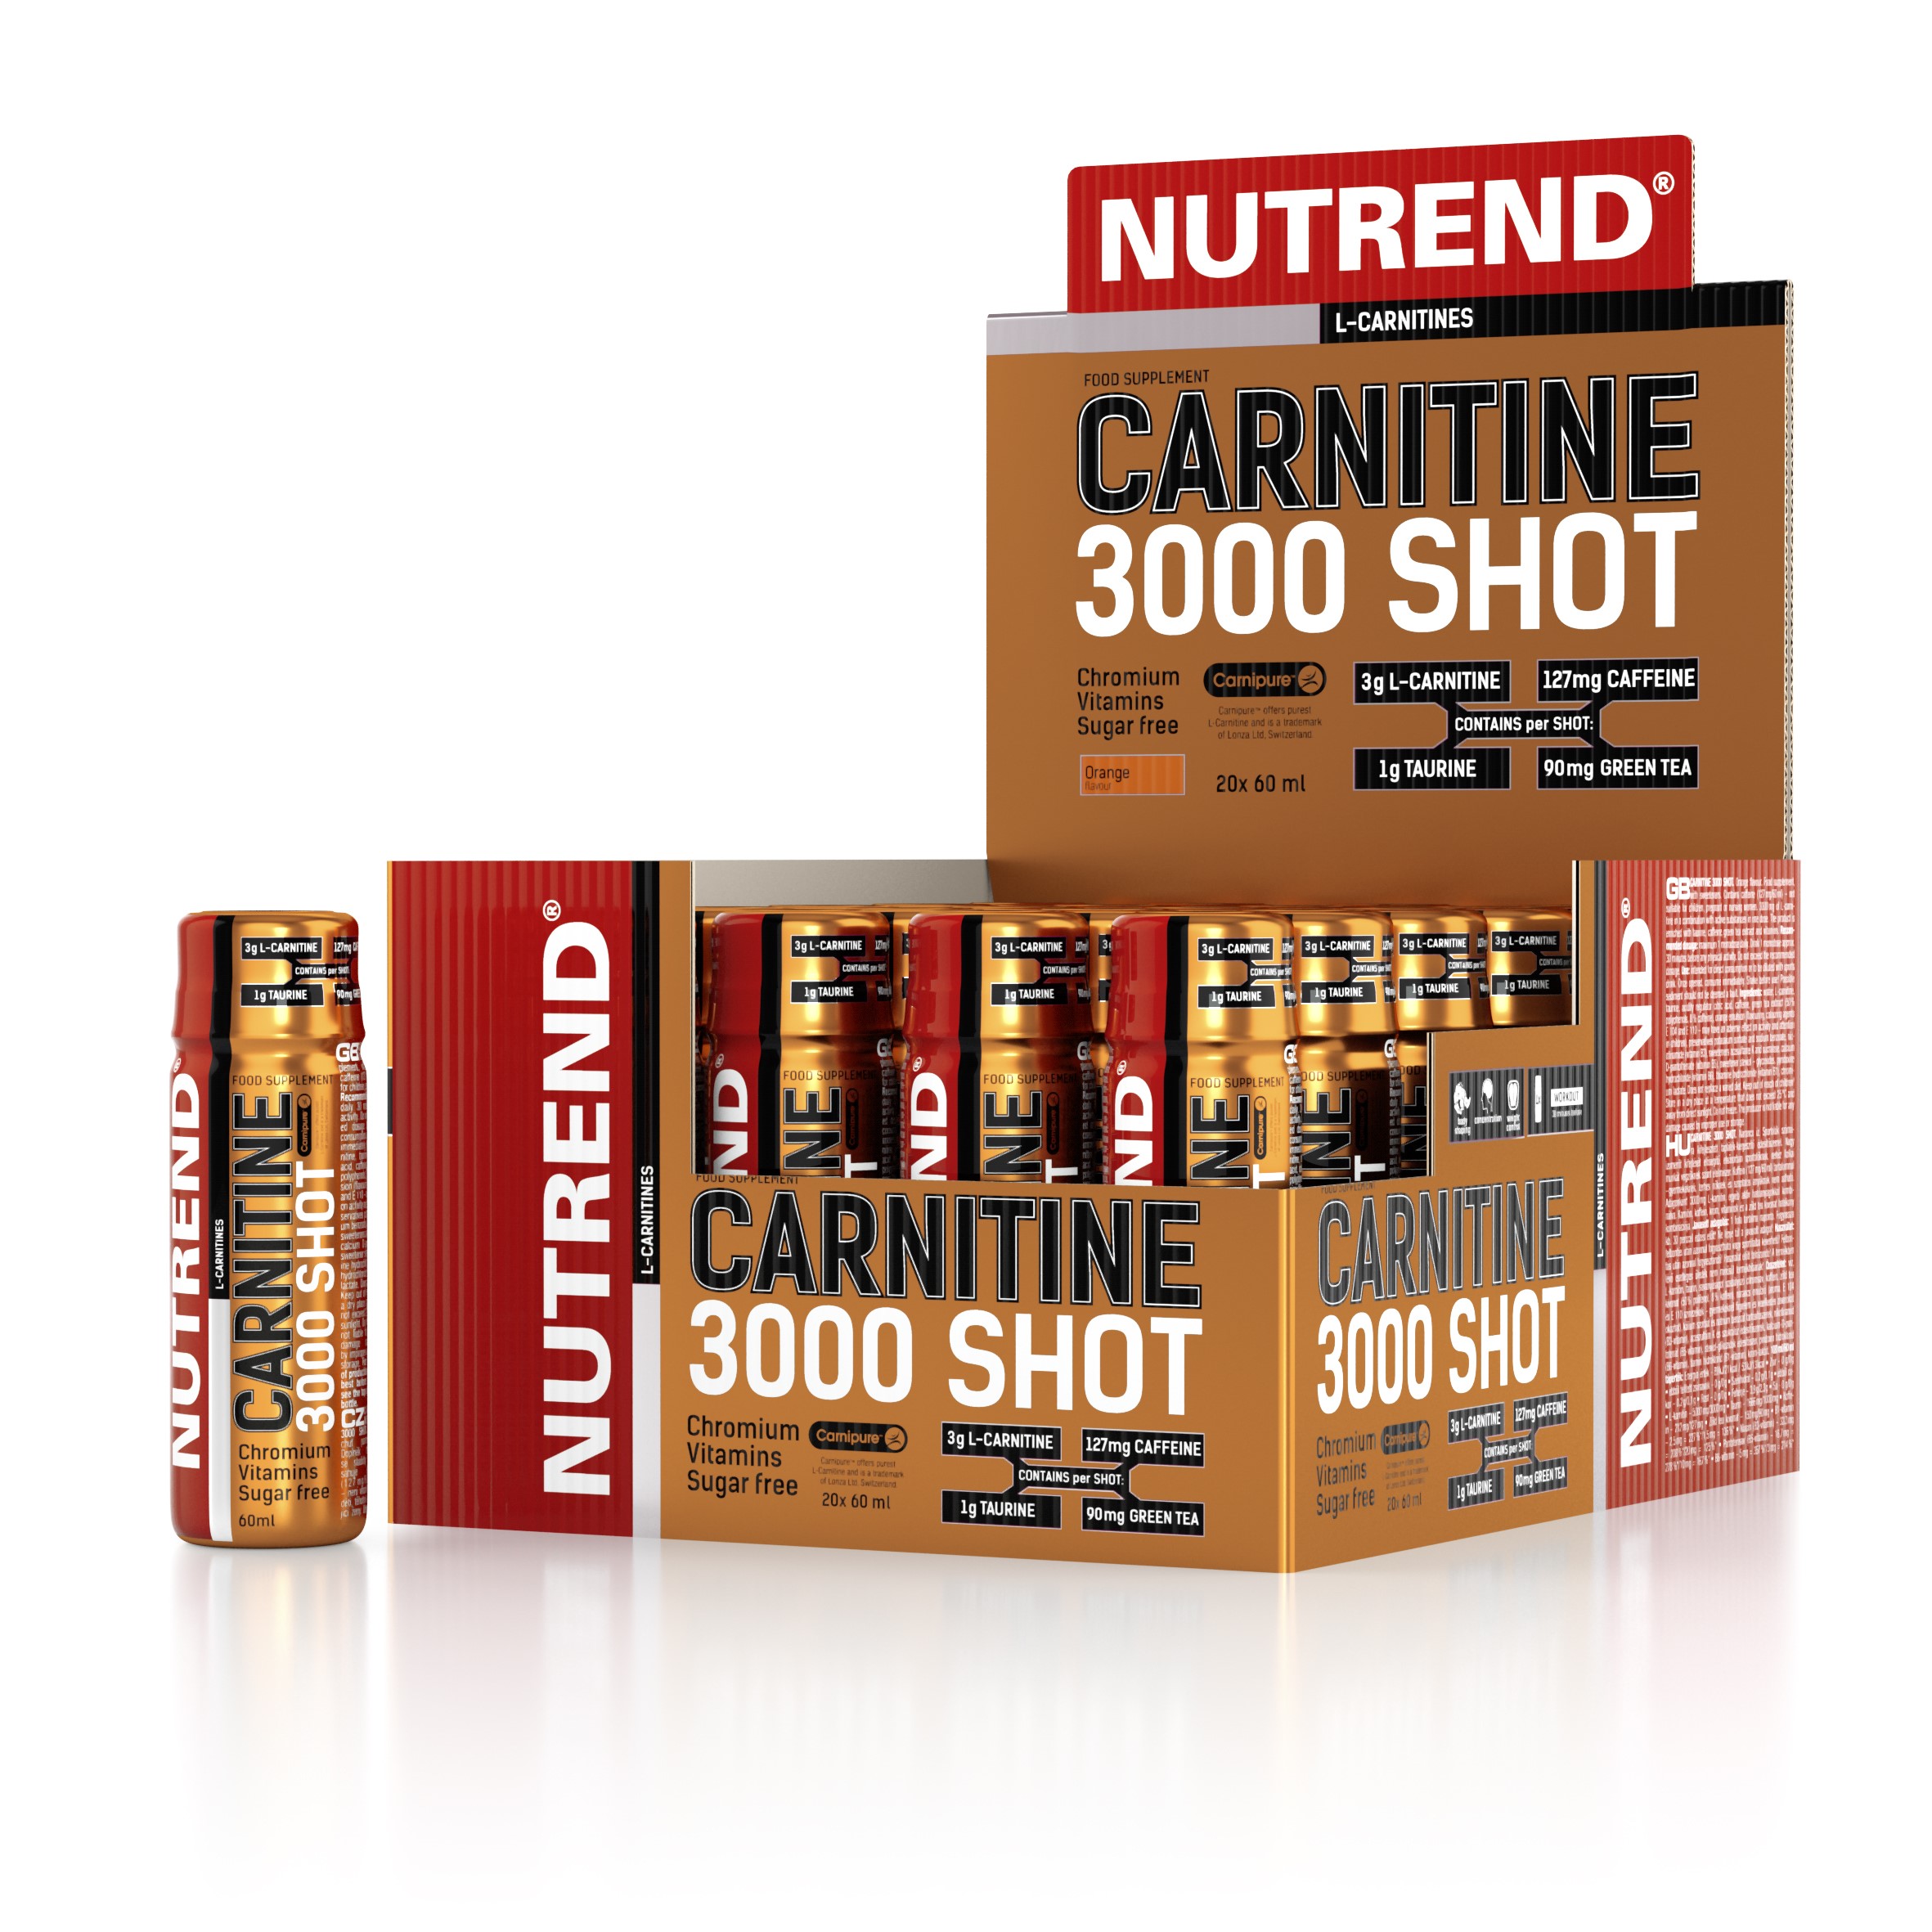 L-Carnitina - CARNITINE 3000 SHOT 60 ml, https:0769429911.websales.ro